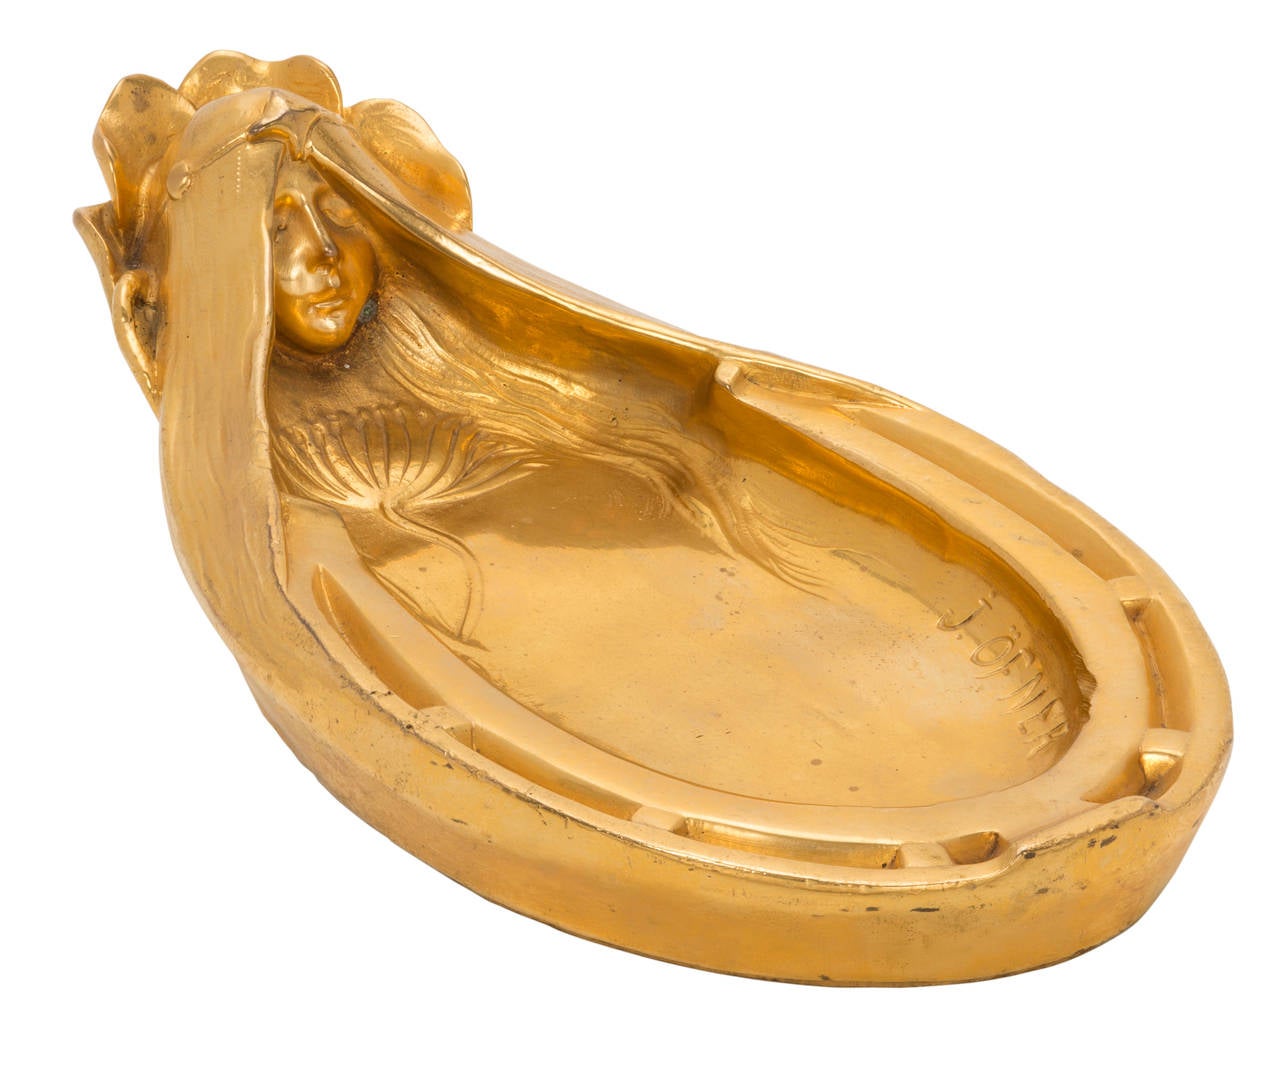 Signed J Ofner gilt bronze dish beautiful maiden with horseshoe design.